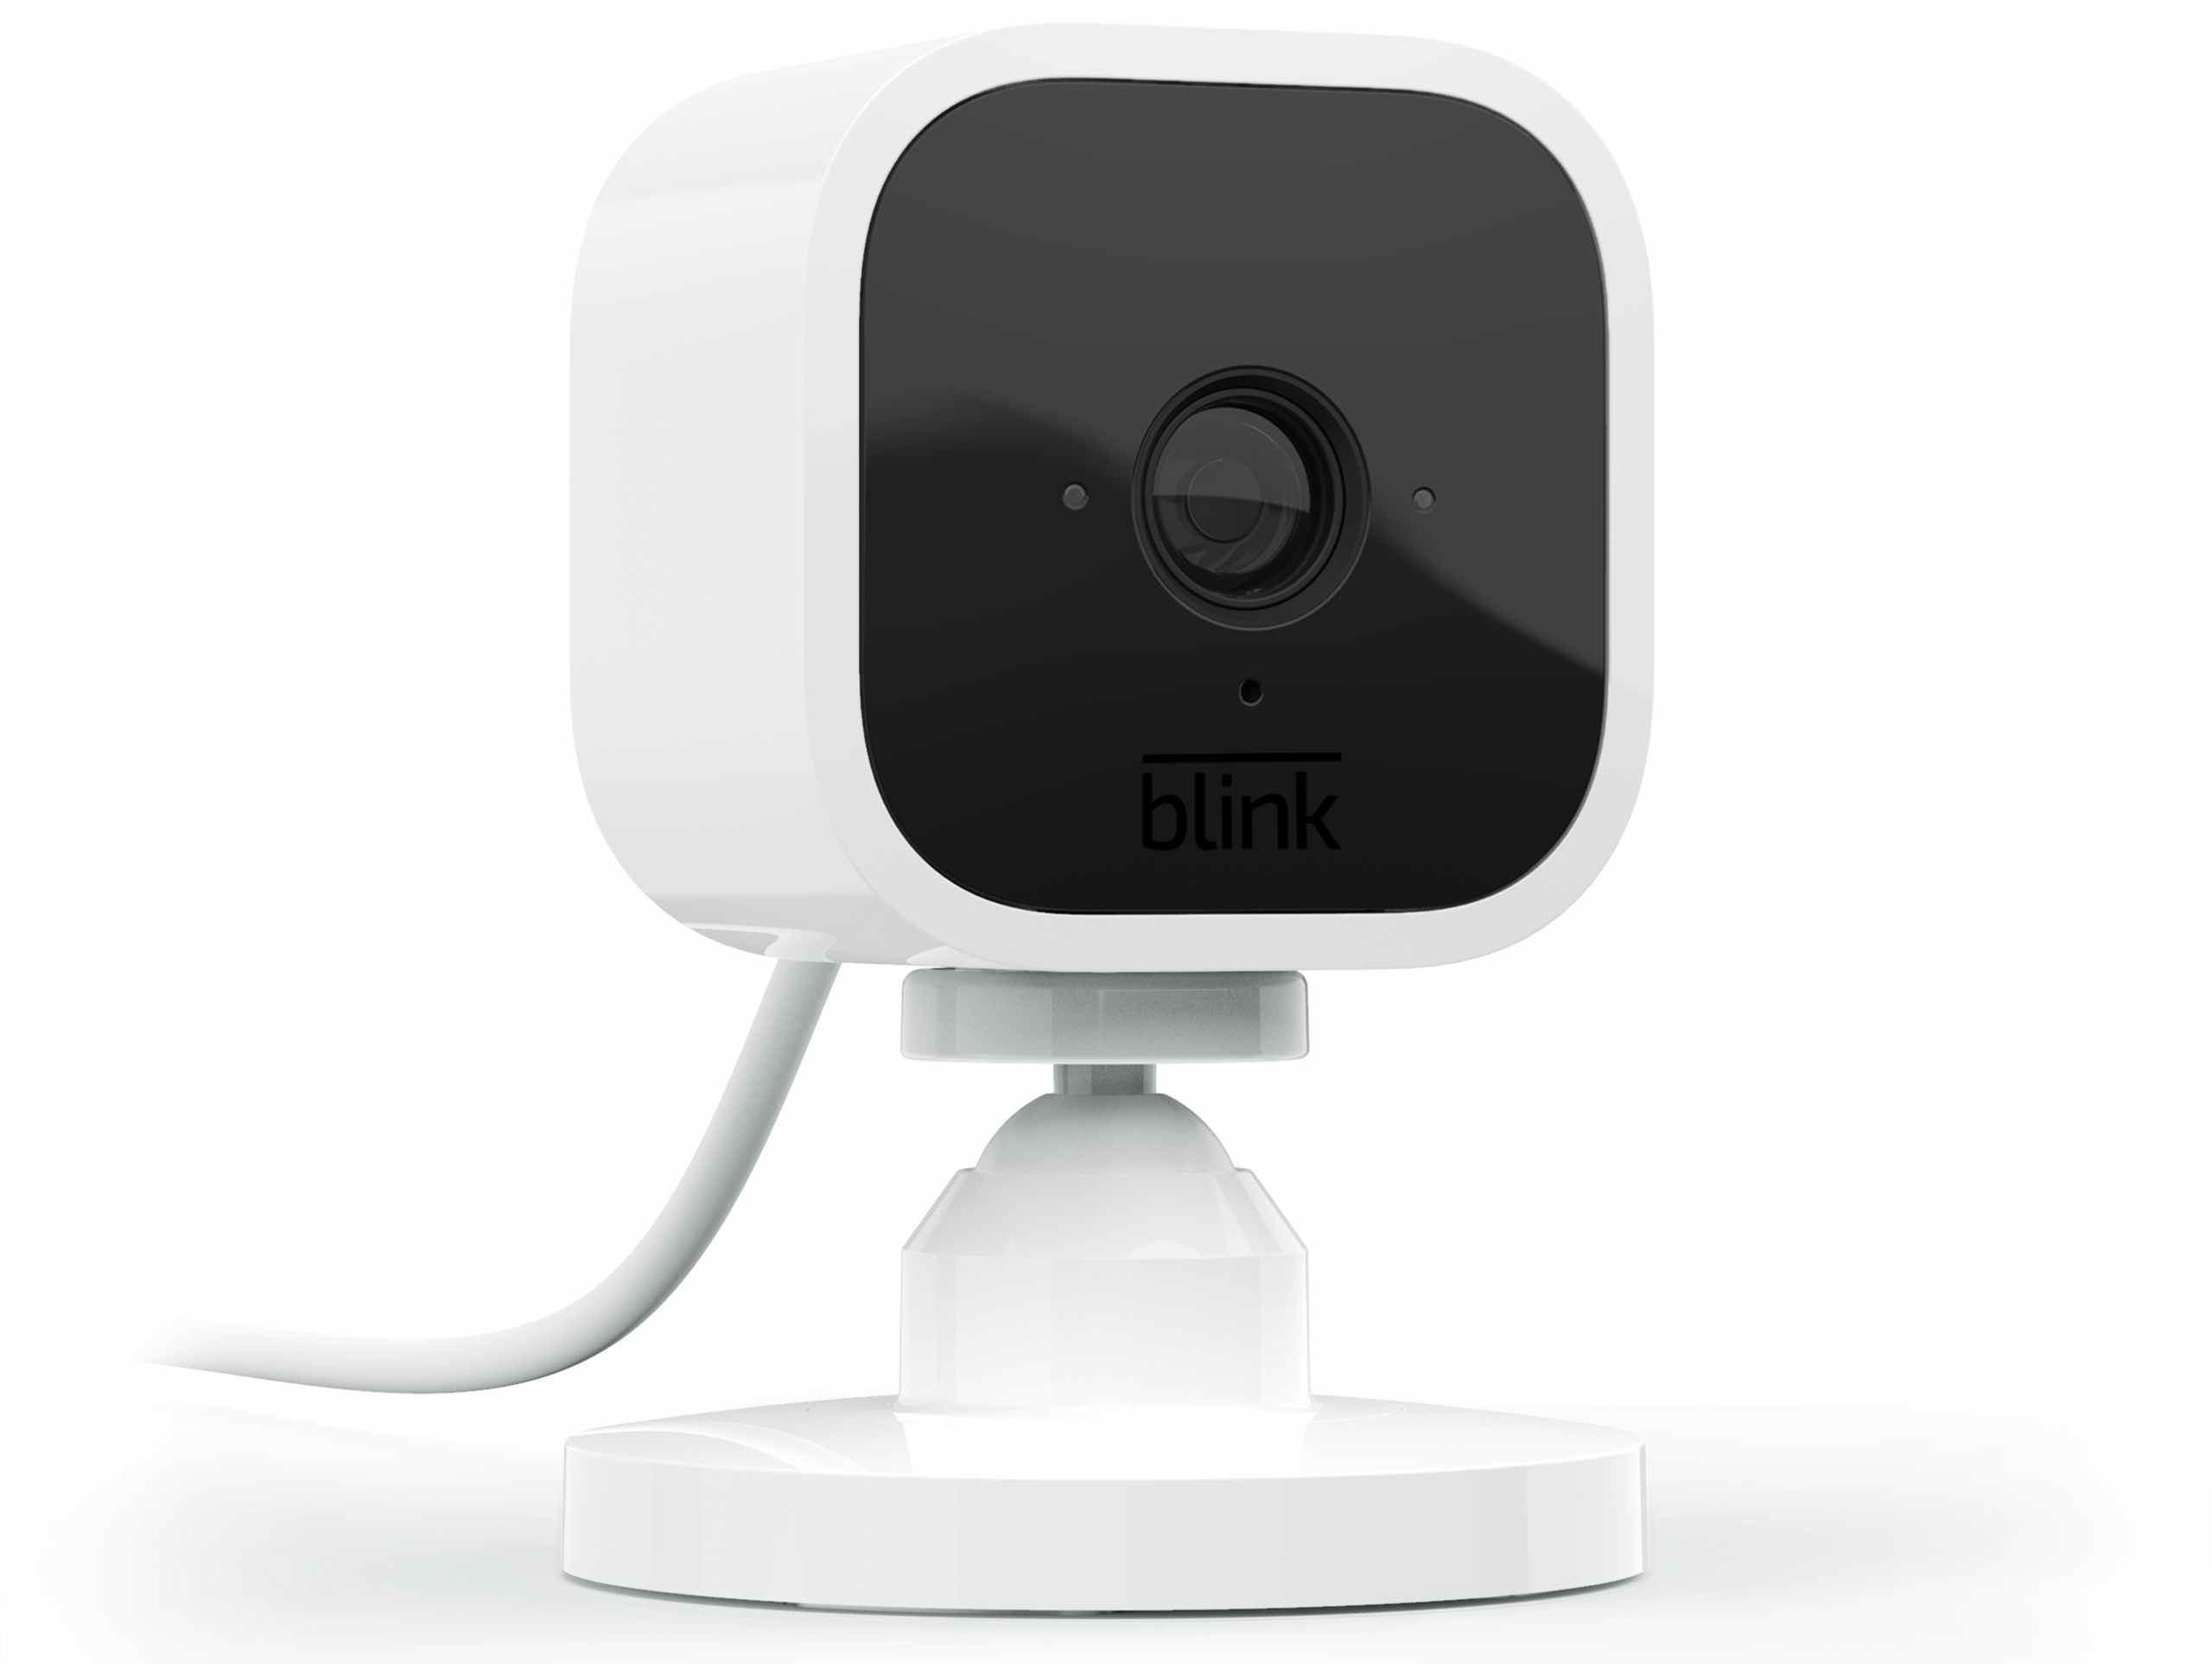 Amazon giving free Blink Mini cameras